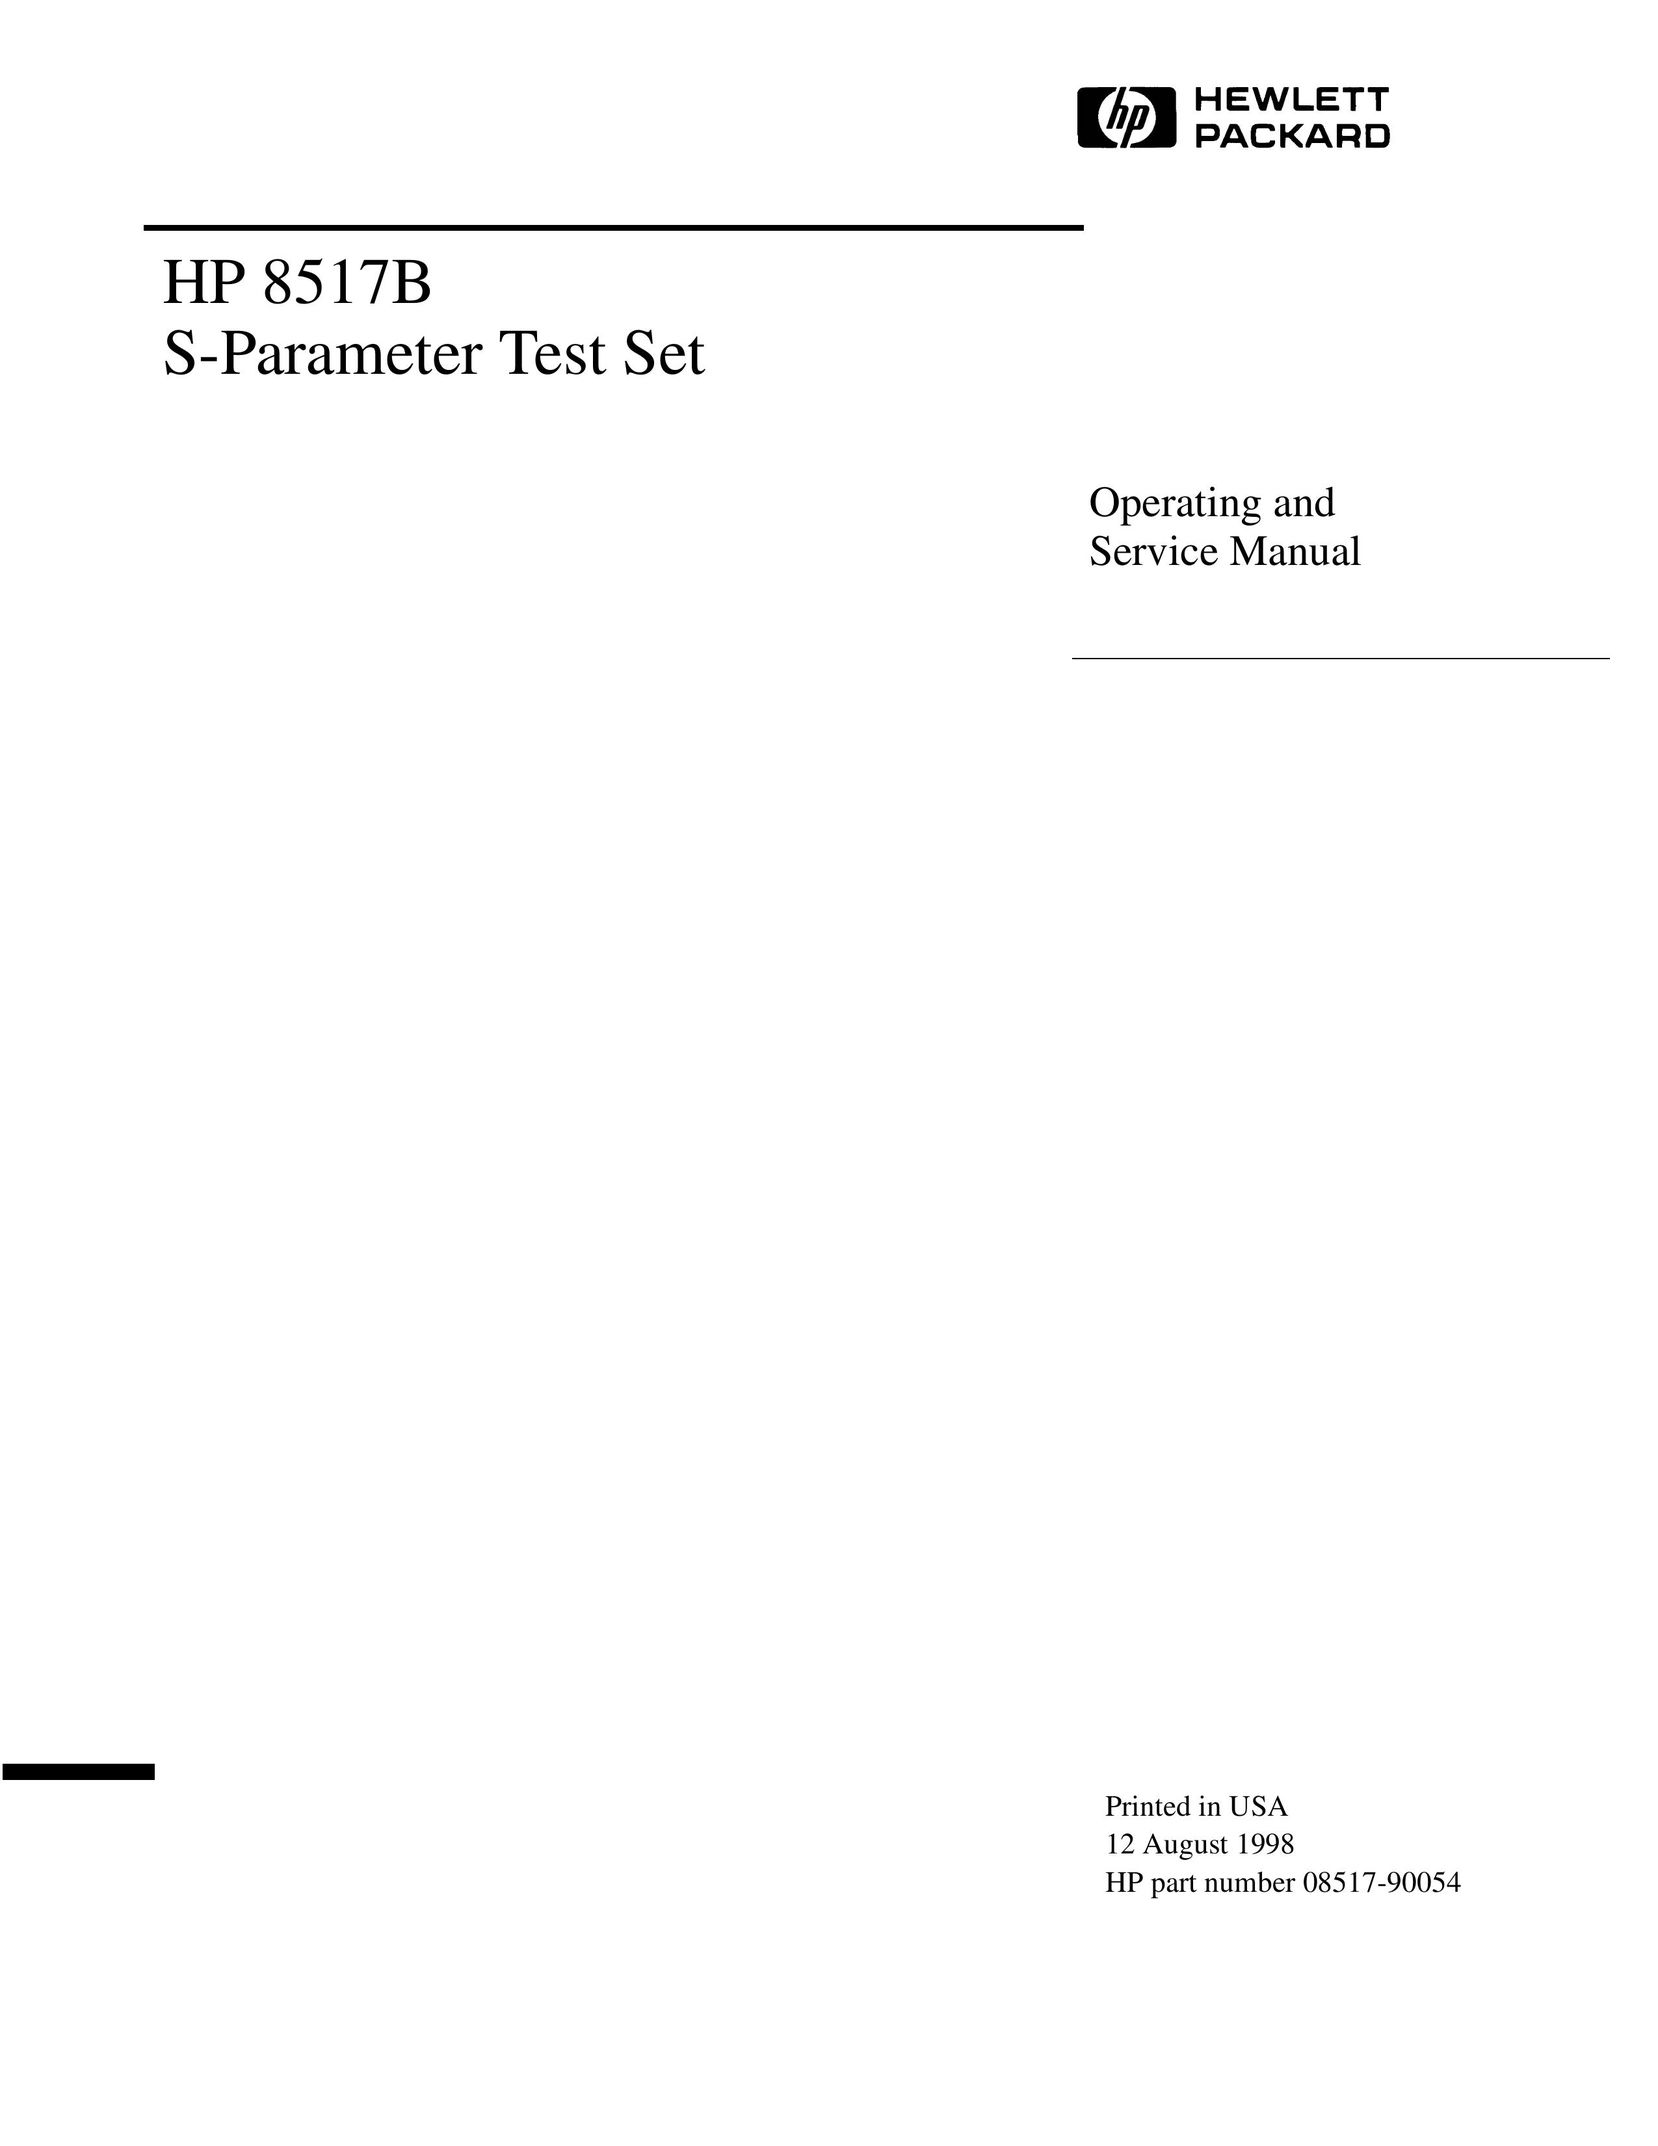 HP (Hewlett-Packard) 8517B Satellite TV System User Manual